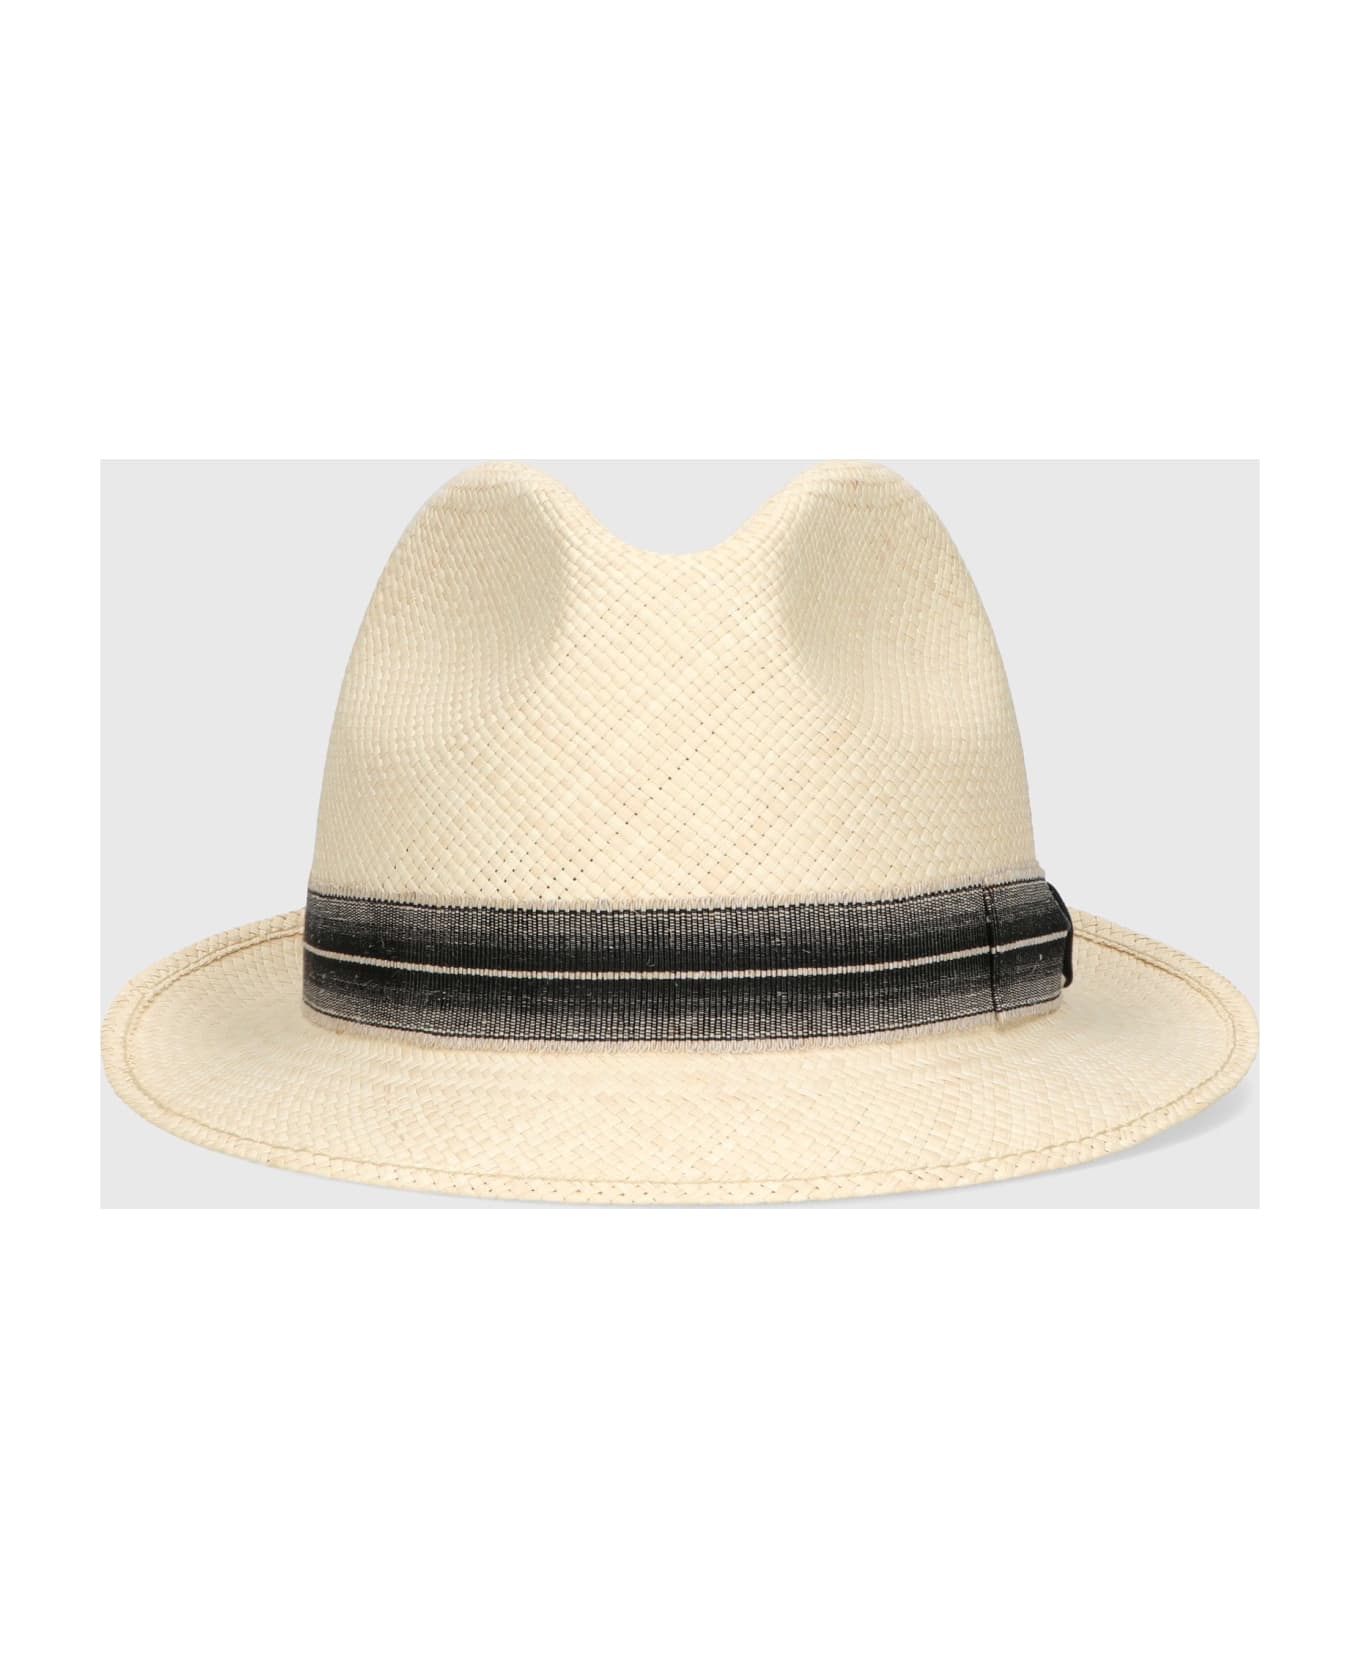 Borsalino Trilby Panama Quito - NATURAL, BLACK/CREAM HAT BAND 帽子